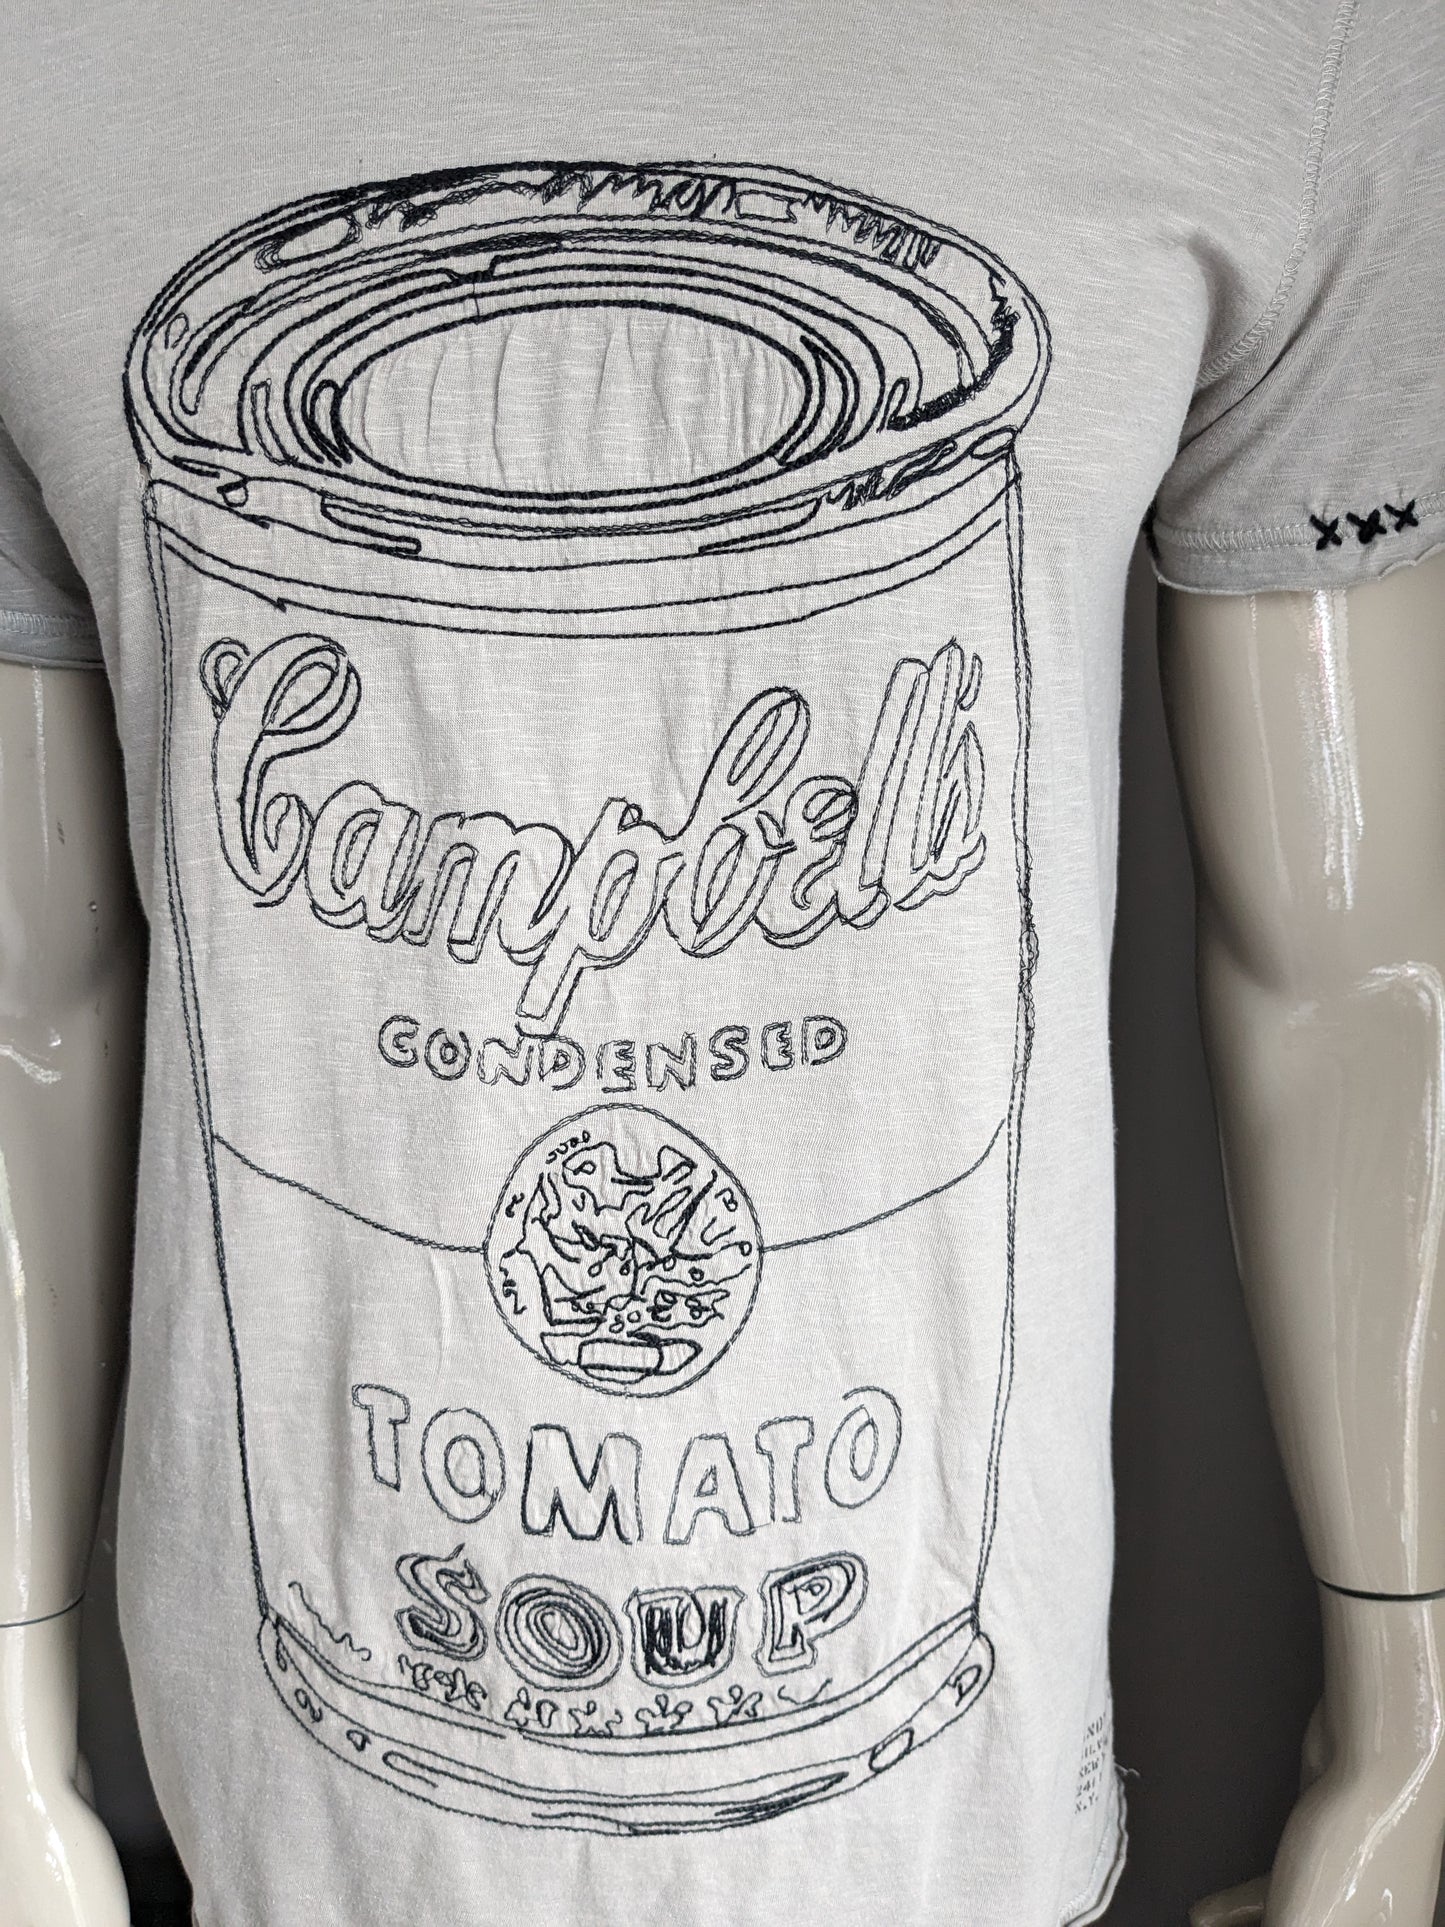 Andy Warhol by Pepe Jeans London Shirt. Kaki mixte. Taille L.